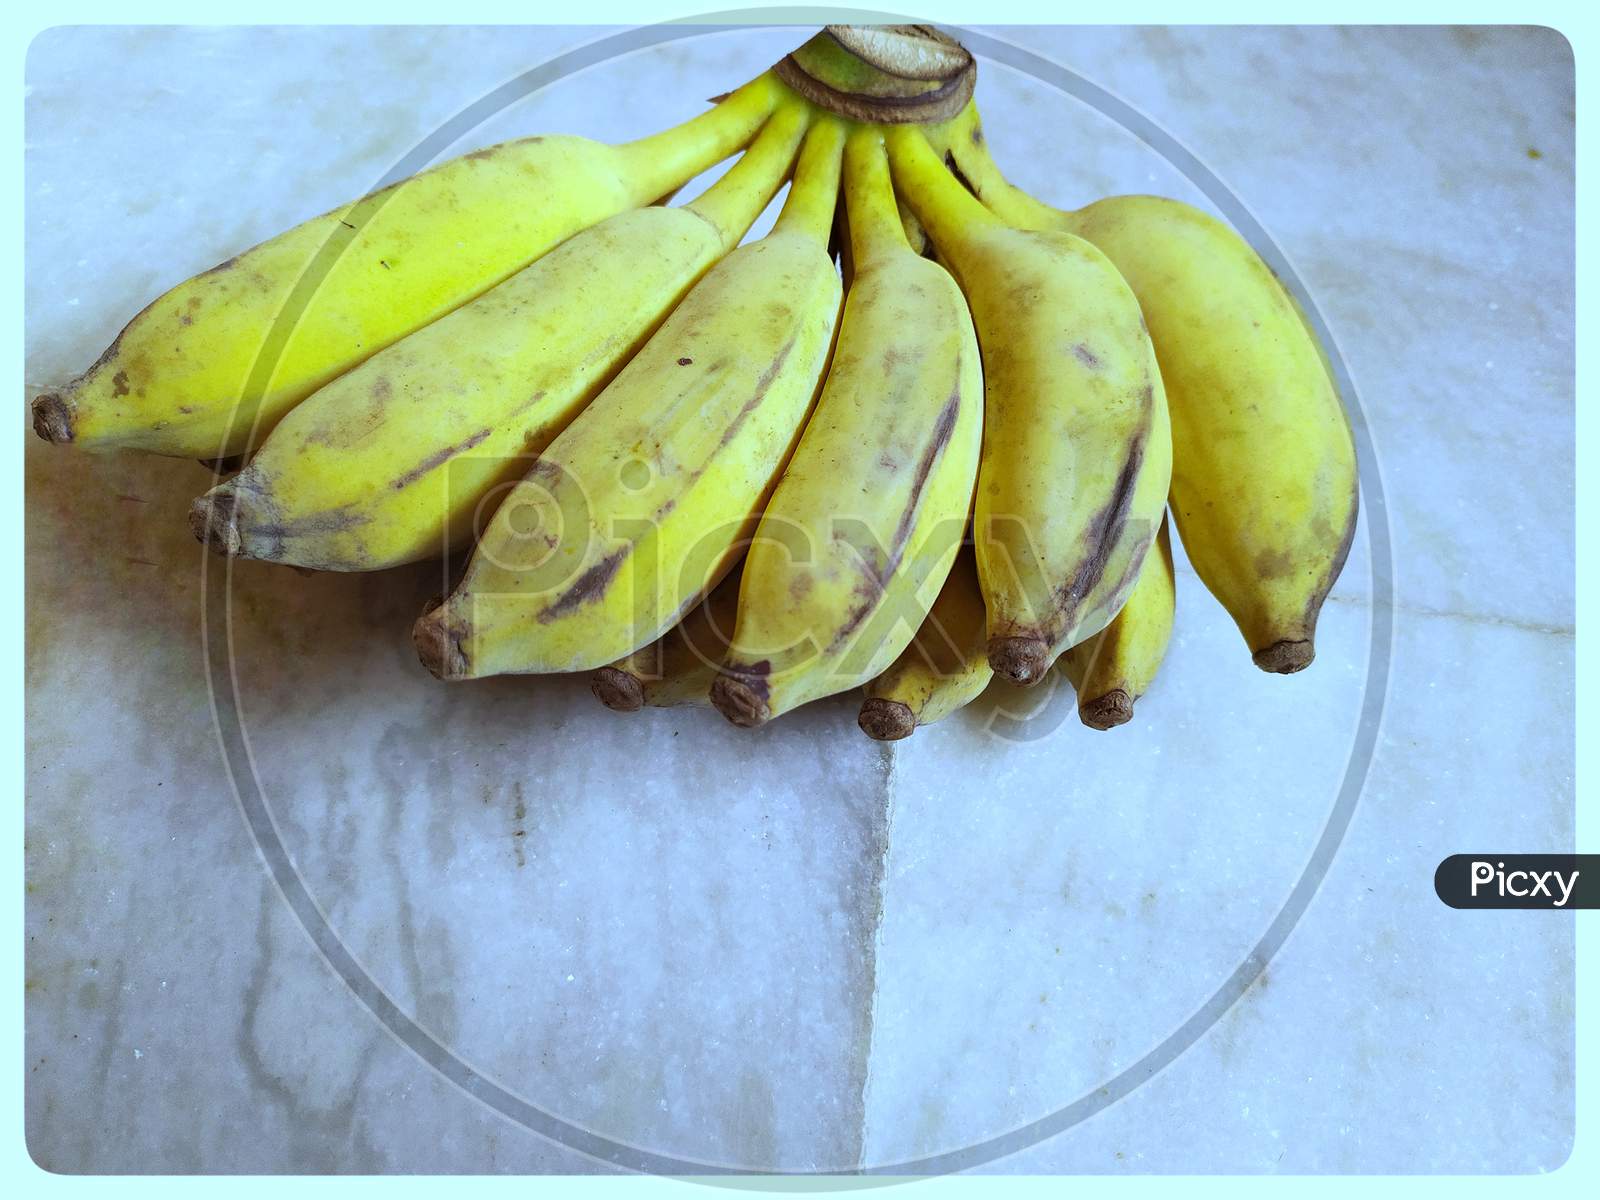 Ripe banana, a healthy fruit.